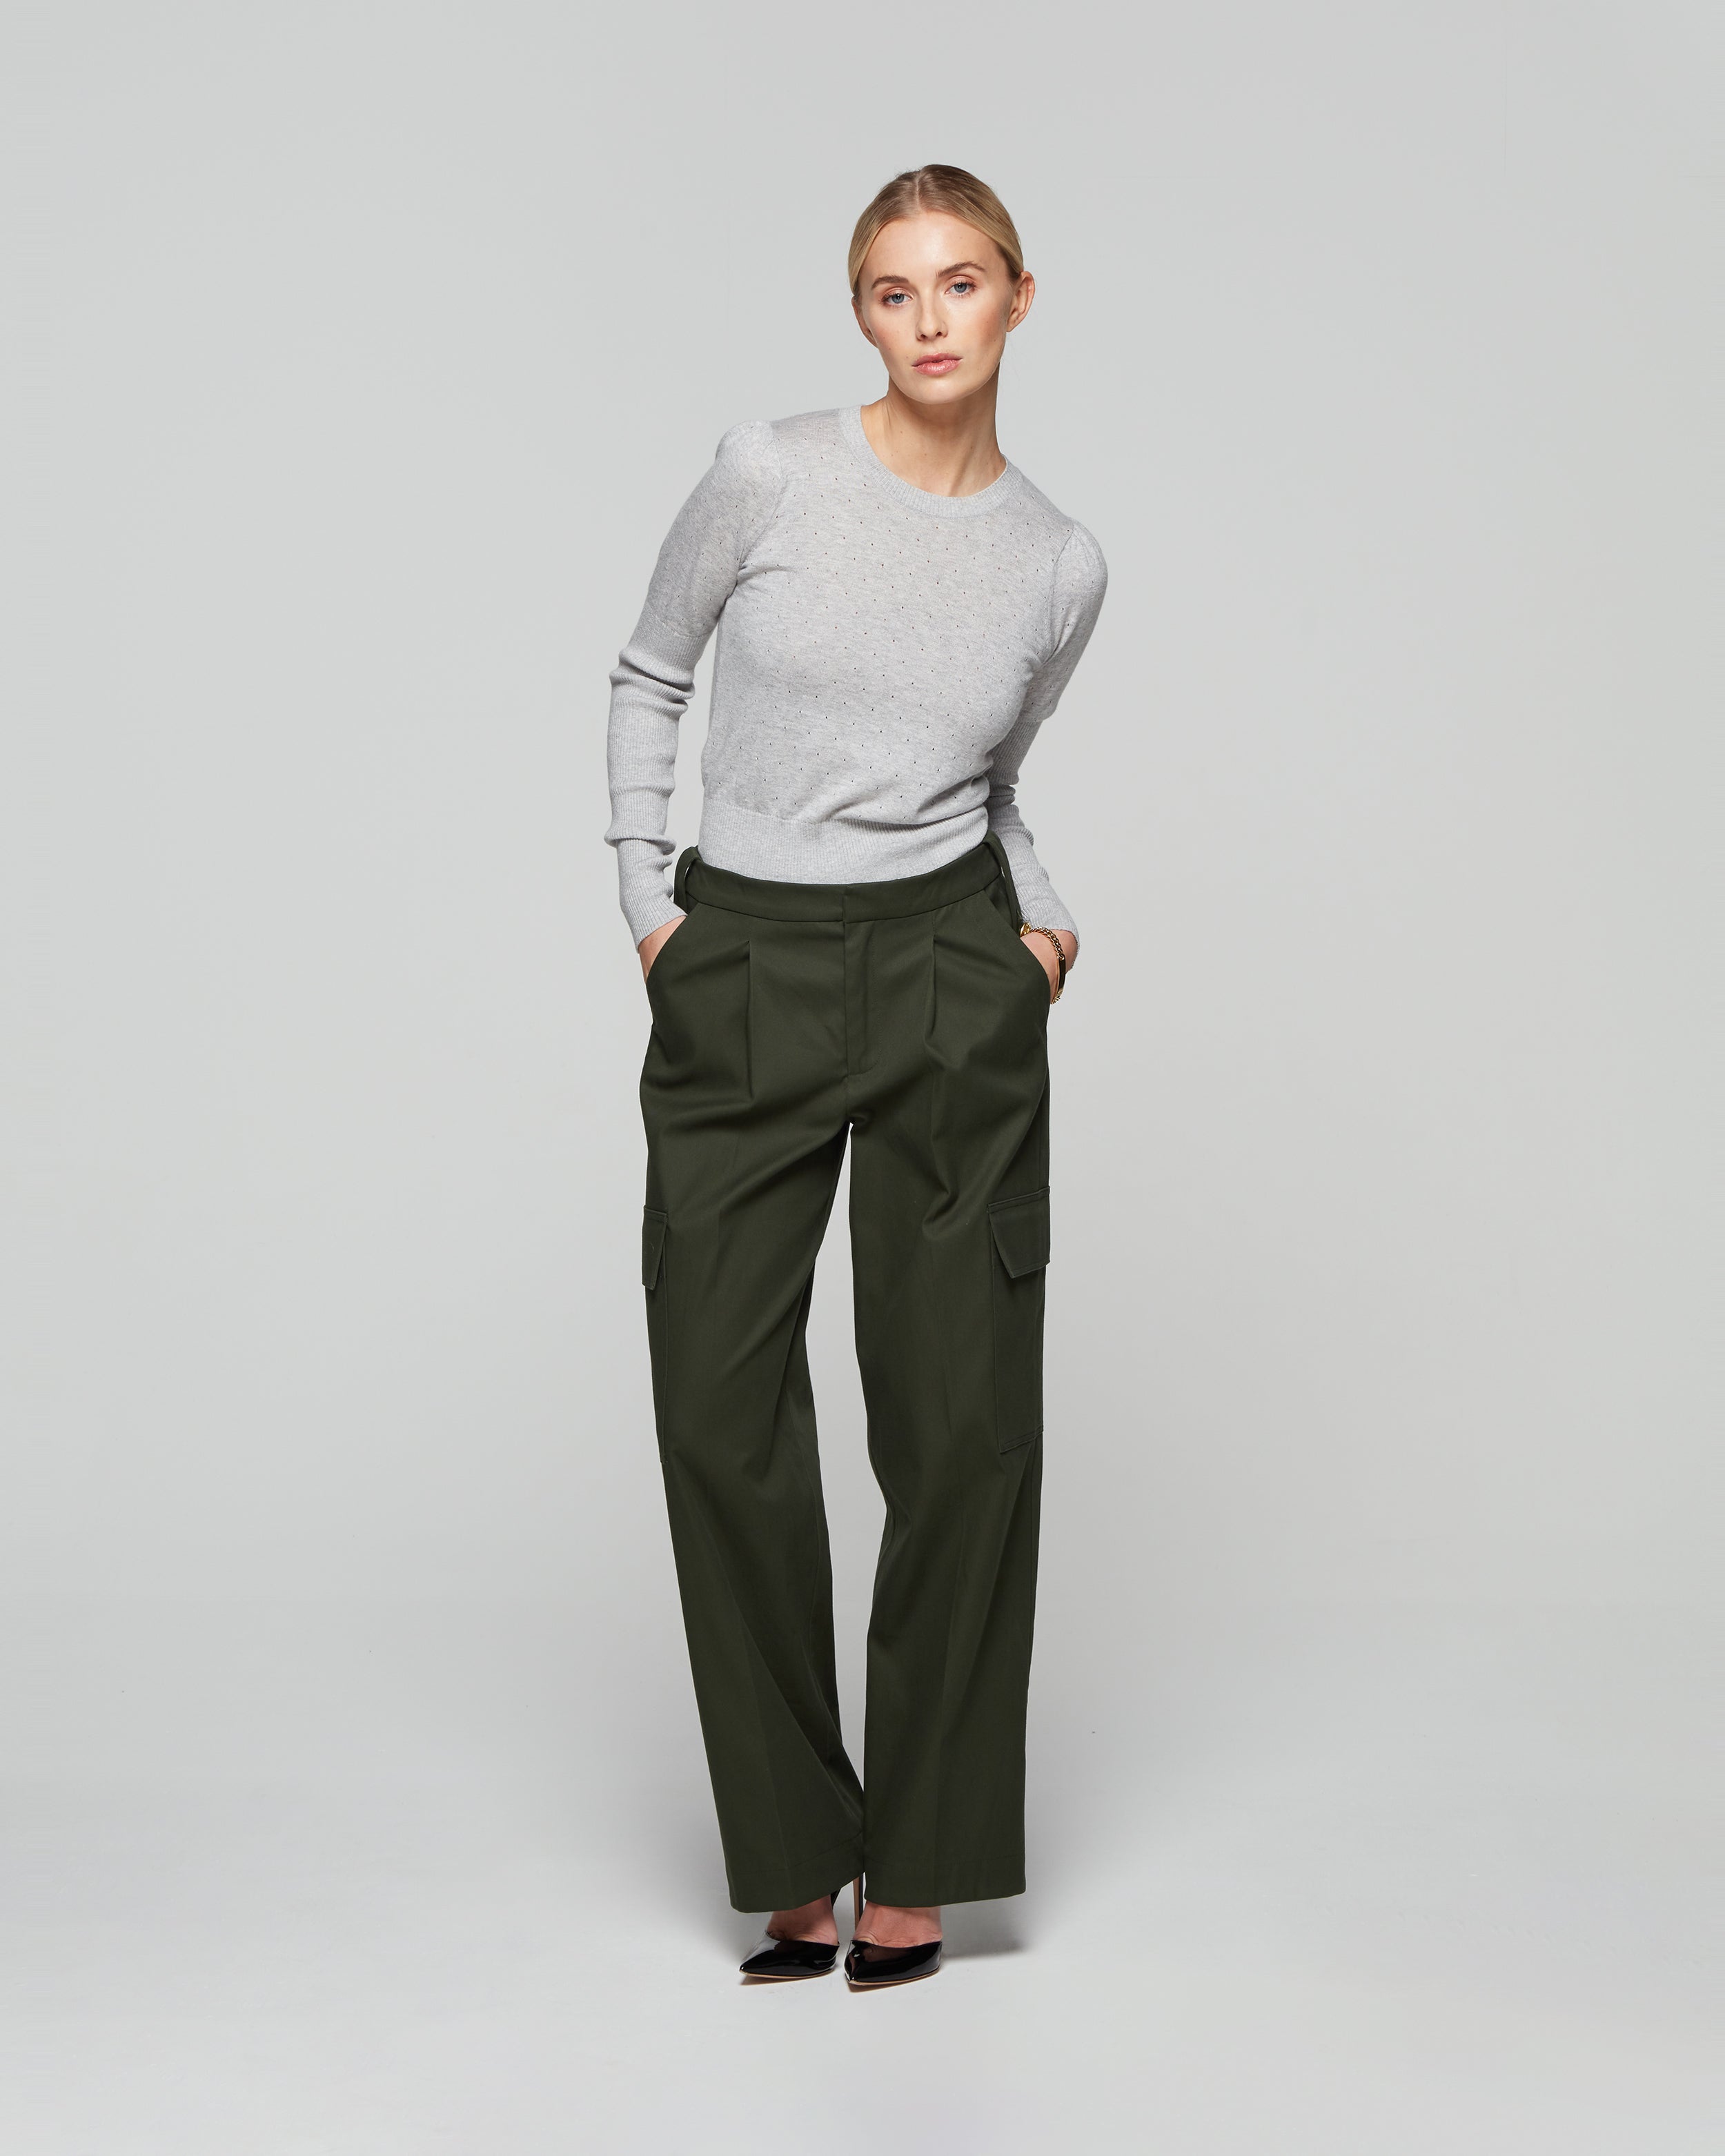 How to Wear Khaki Pants ? 22 Outfit Ideas for Women | Ropa, Moda de ropa,  Ropa casual